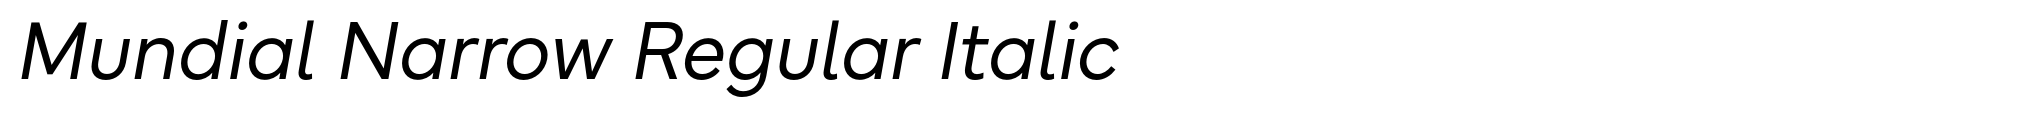 Mundial Narrow Regular Italic image